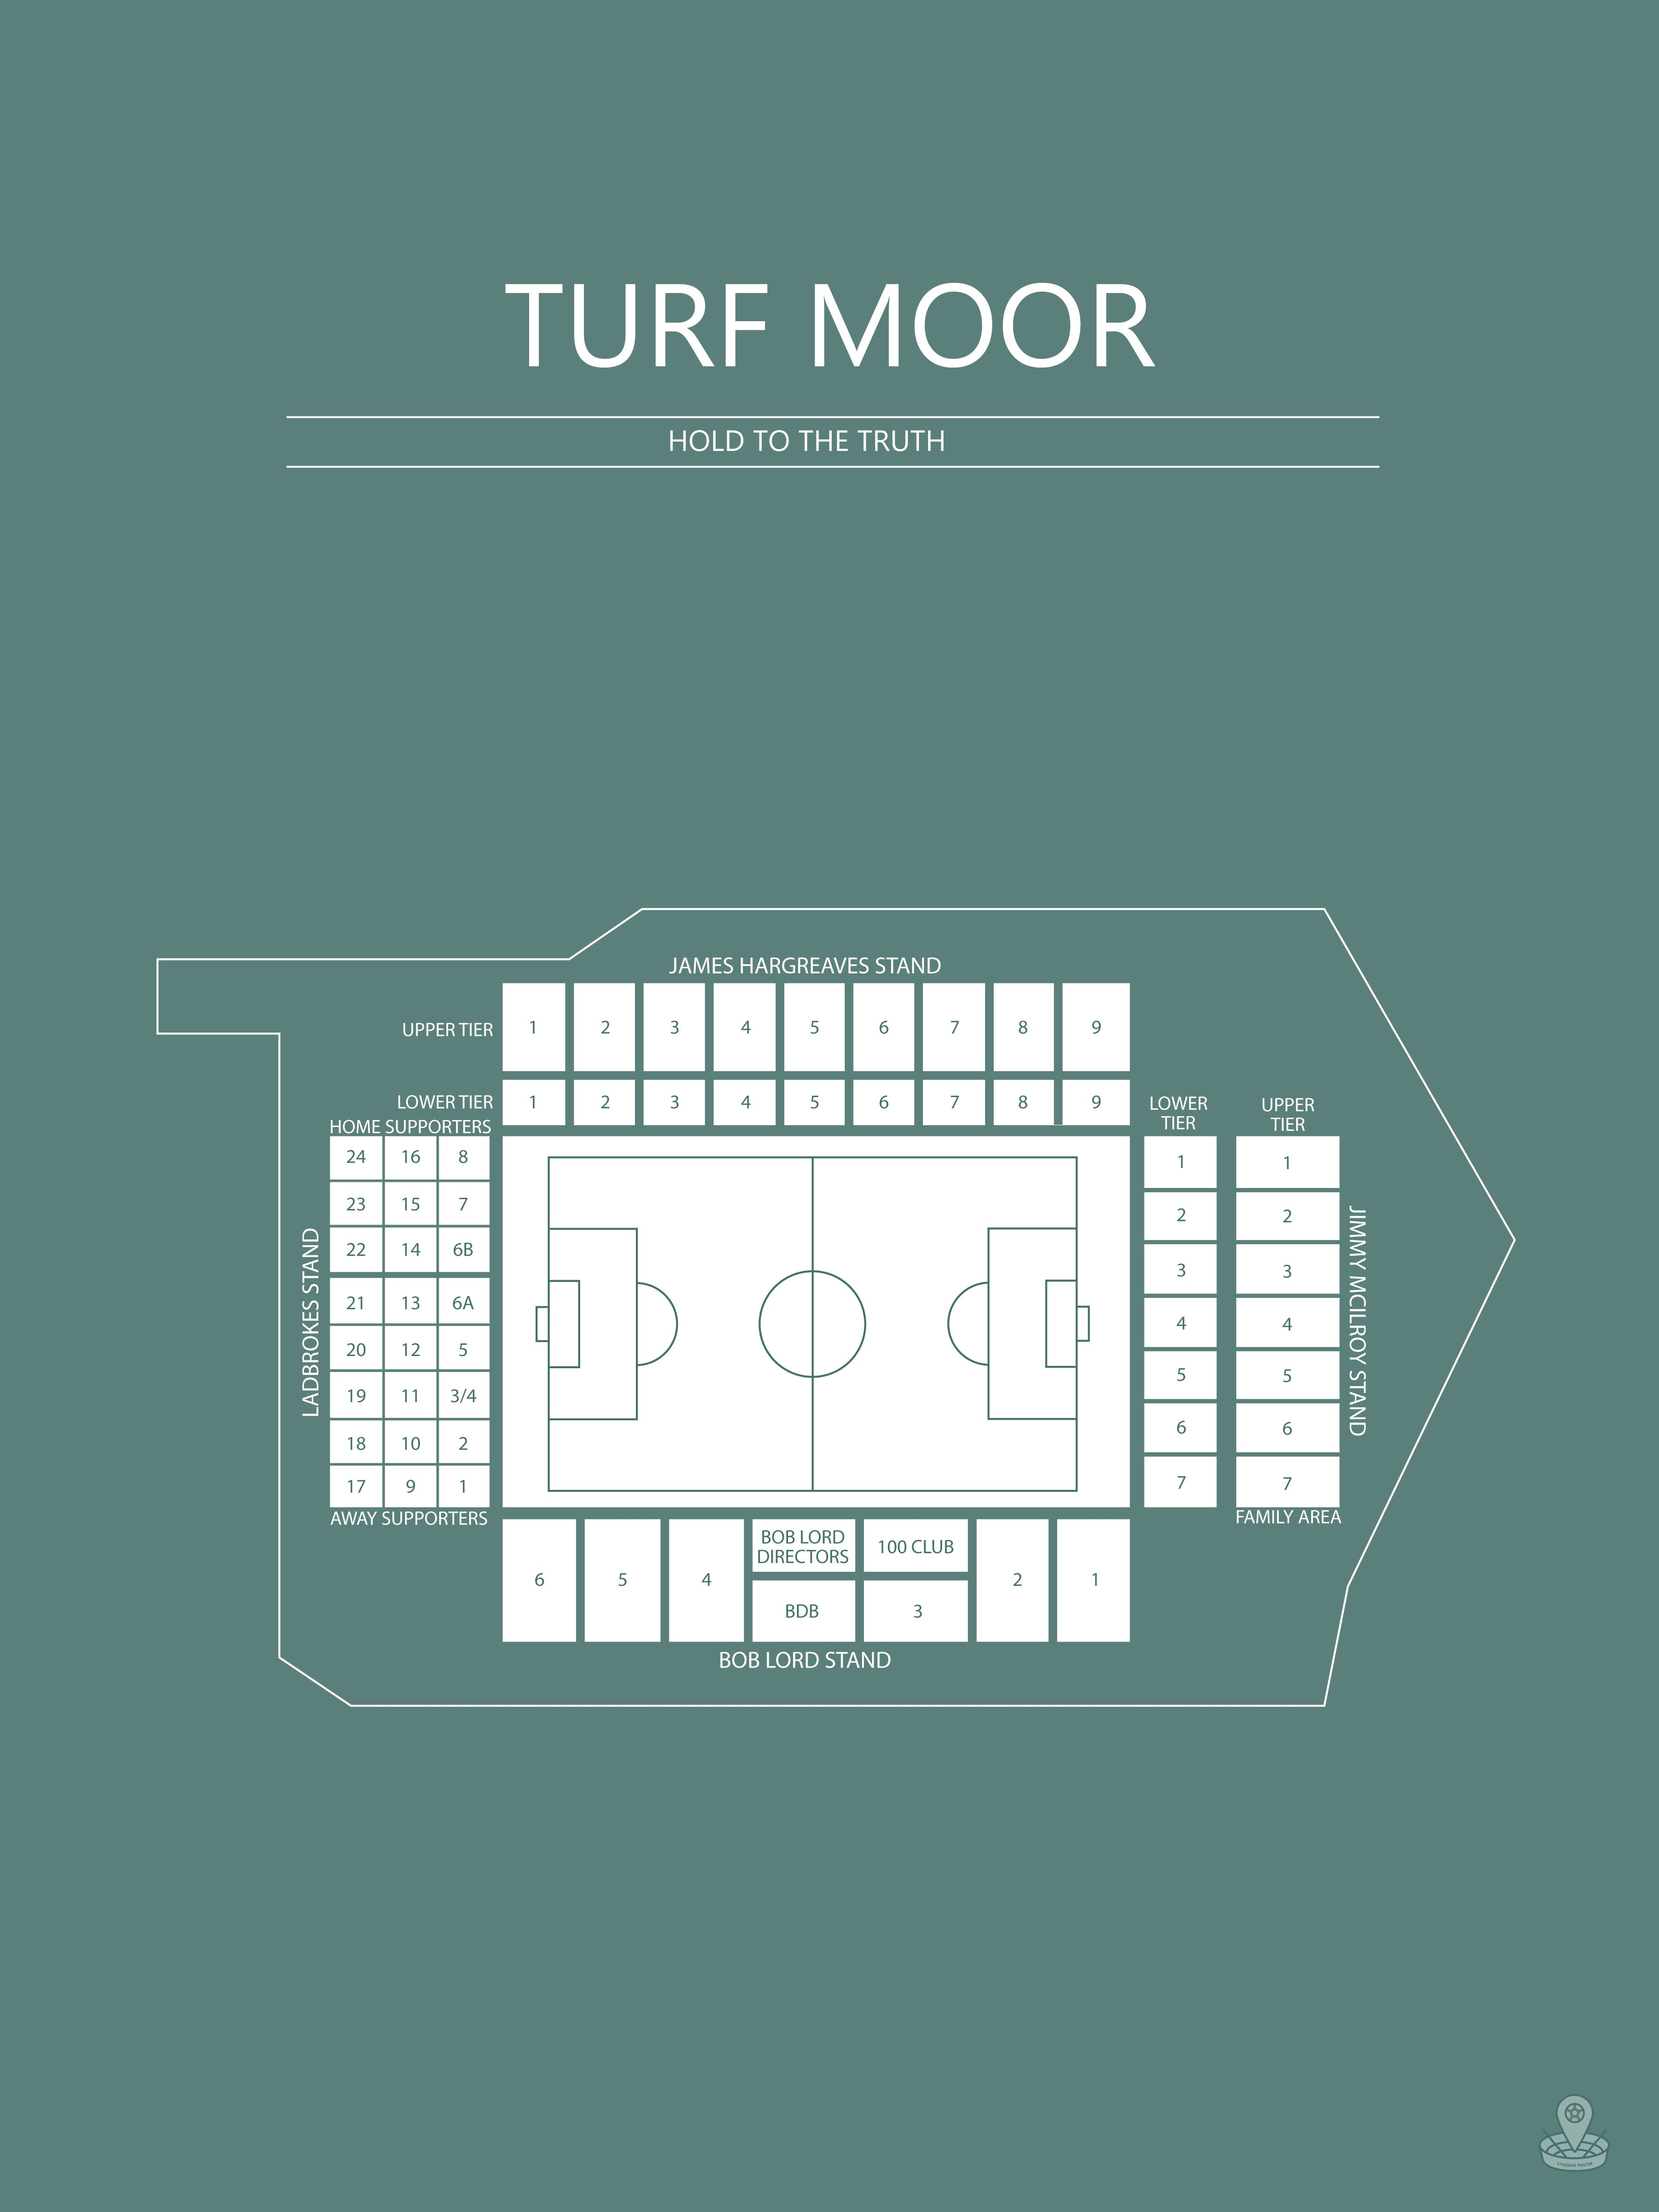 Fodbold plakat Burnley Turf Moor mørkegrøn